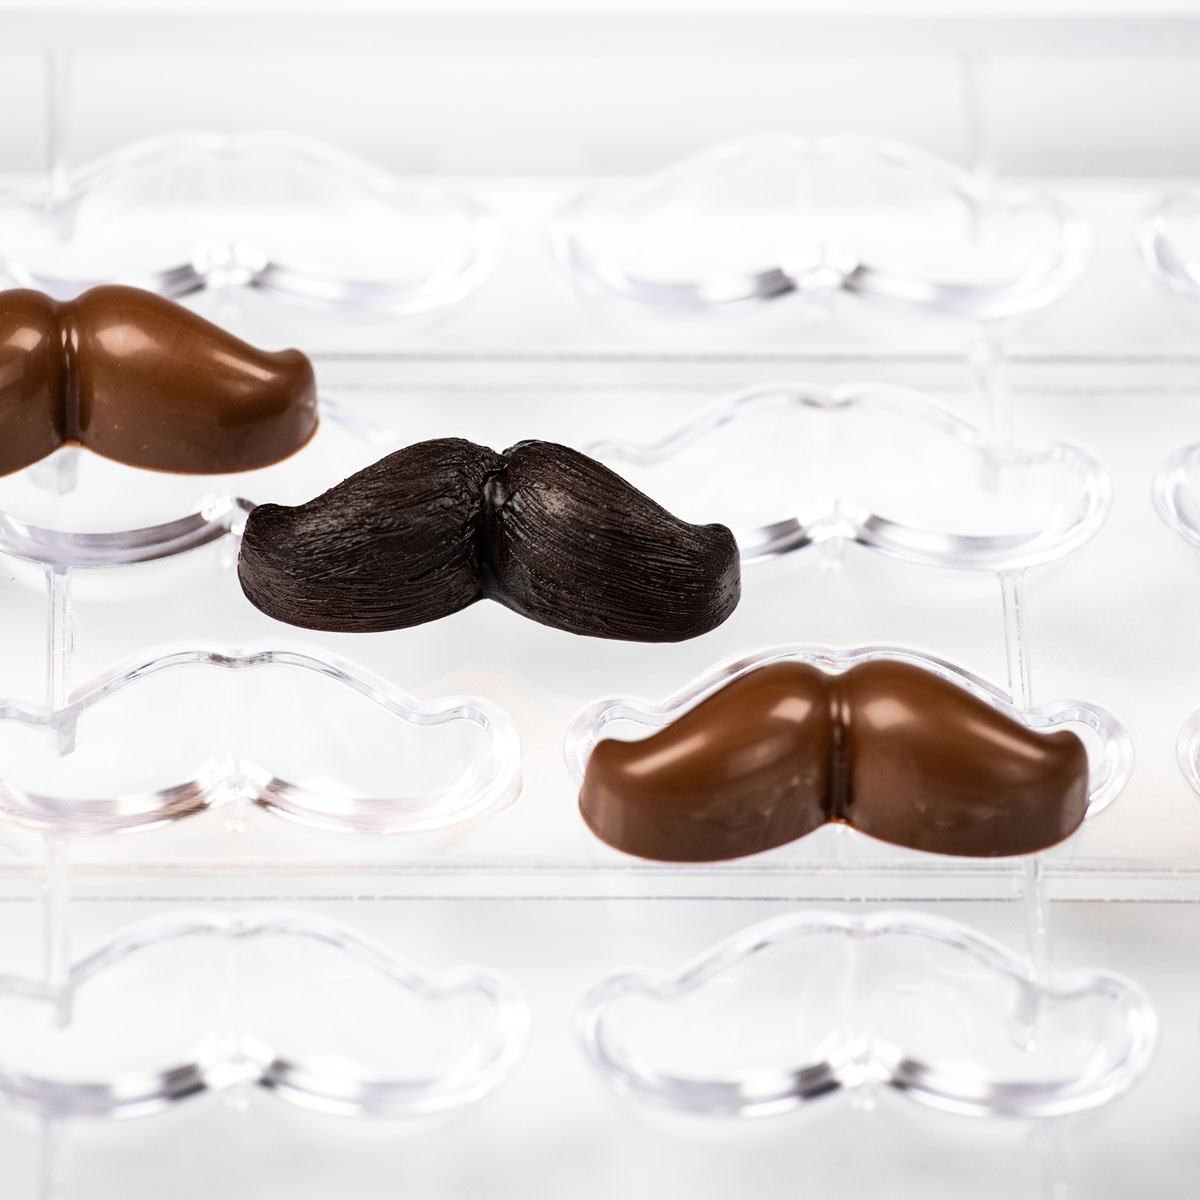 https://www.pastrychefsboutique.com/26102/martellato-ma1053-professional-polycarbonate-joe-mustache-chocolate-mold-16mm-x-54mm-x-h-16mm-10gr-16-cavity-themed-molds.jpg